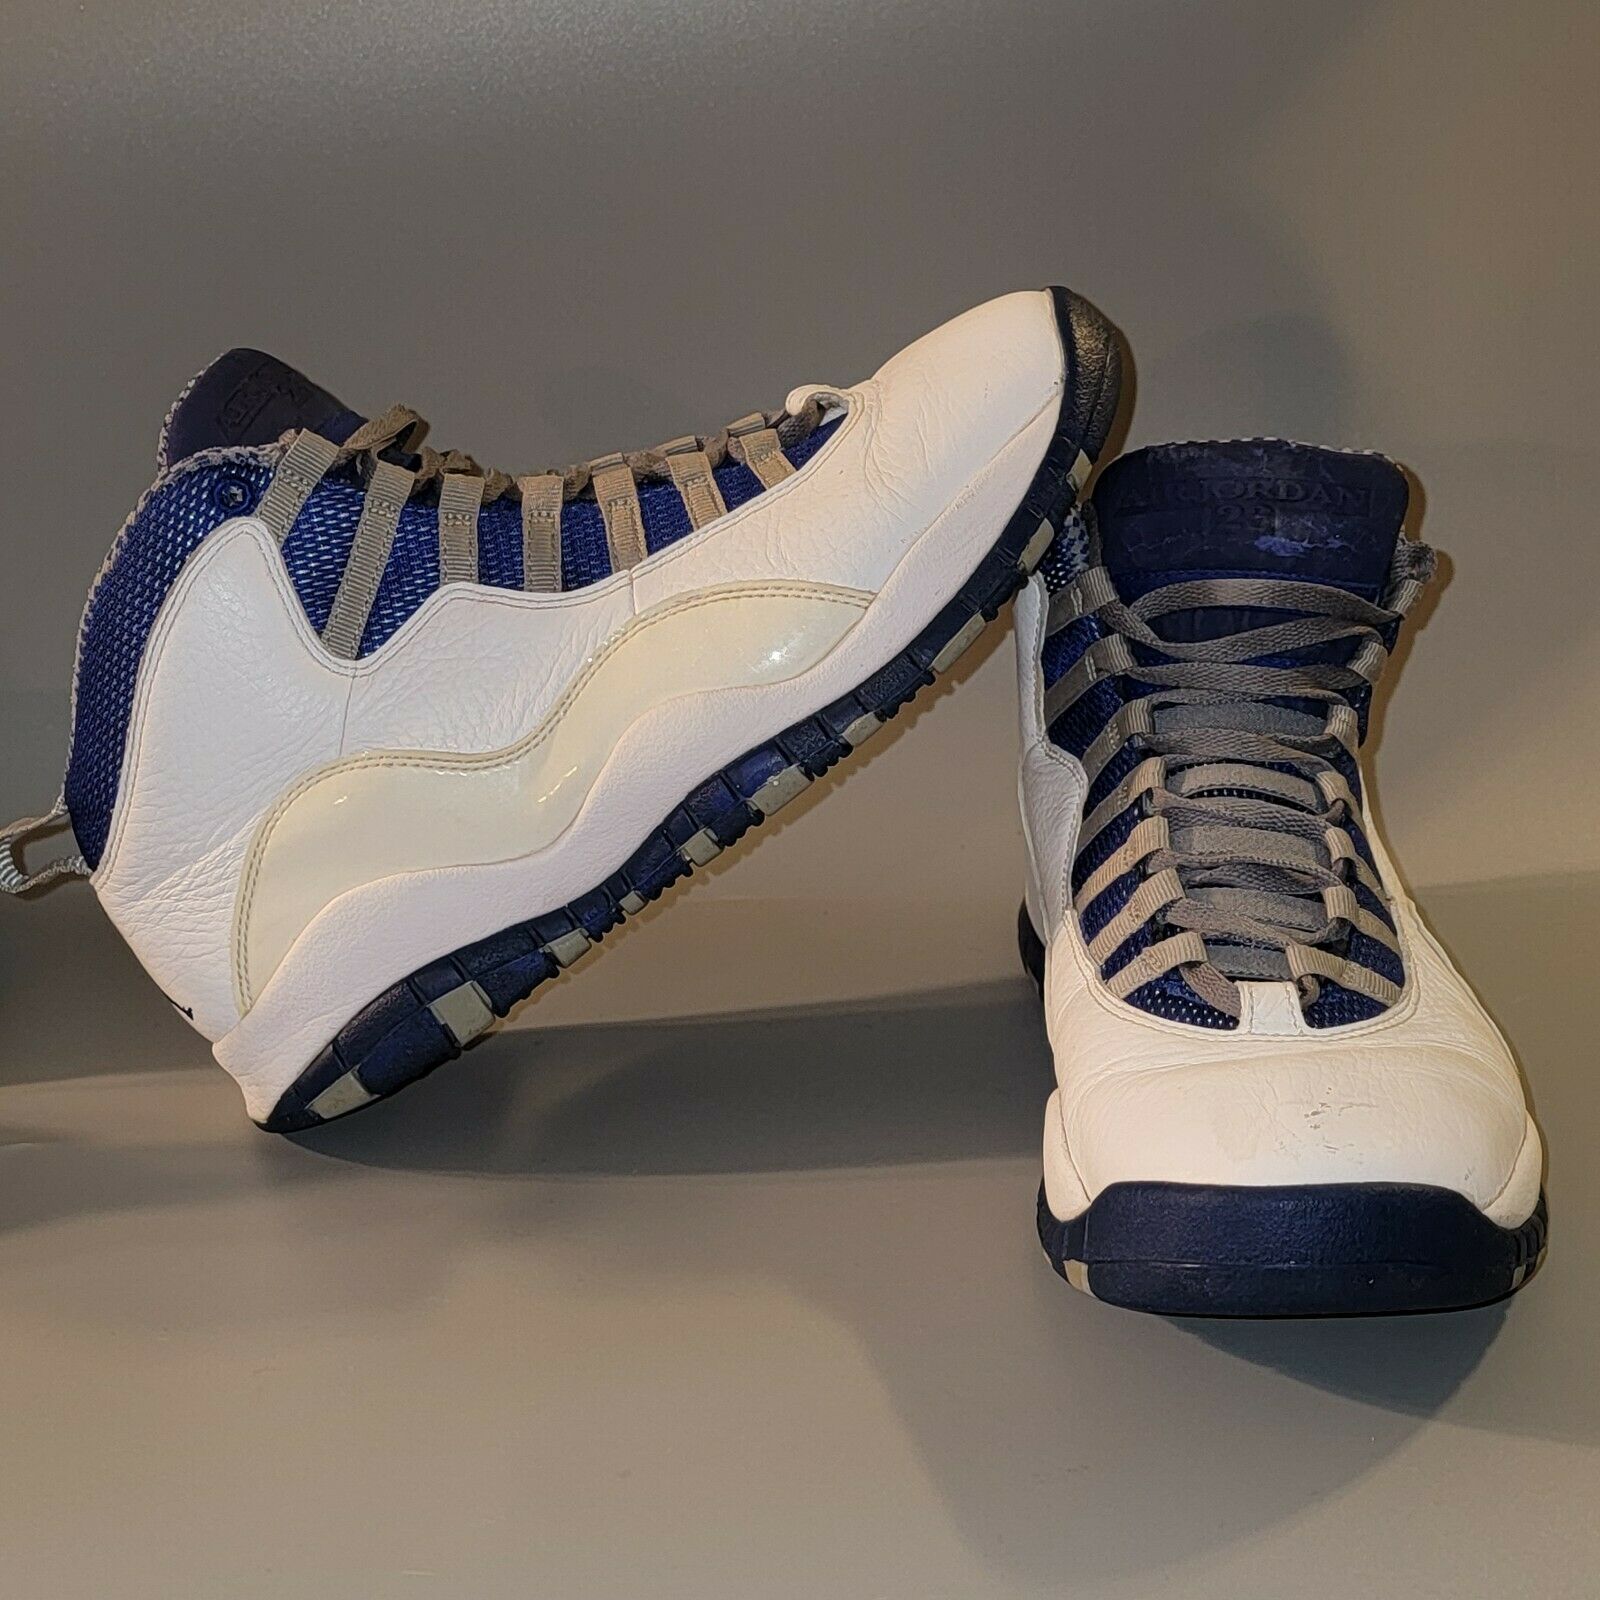 Nike Air Jordan 10 X Retro Old Royal Men's Size 7.5 Blue/White Shoes(487214-107)